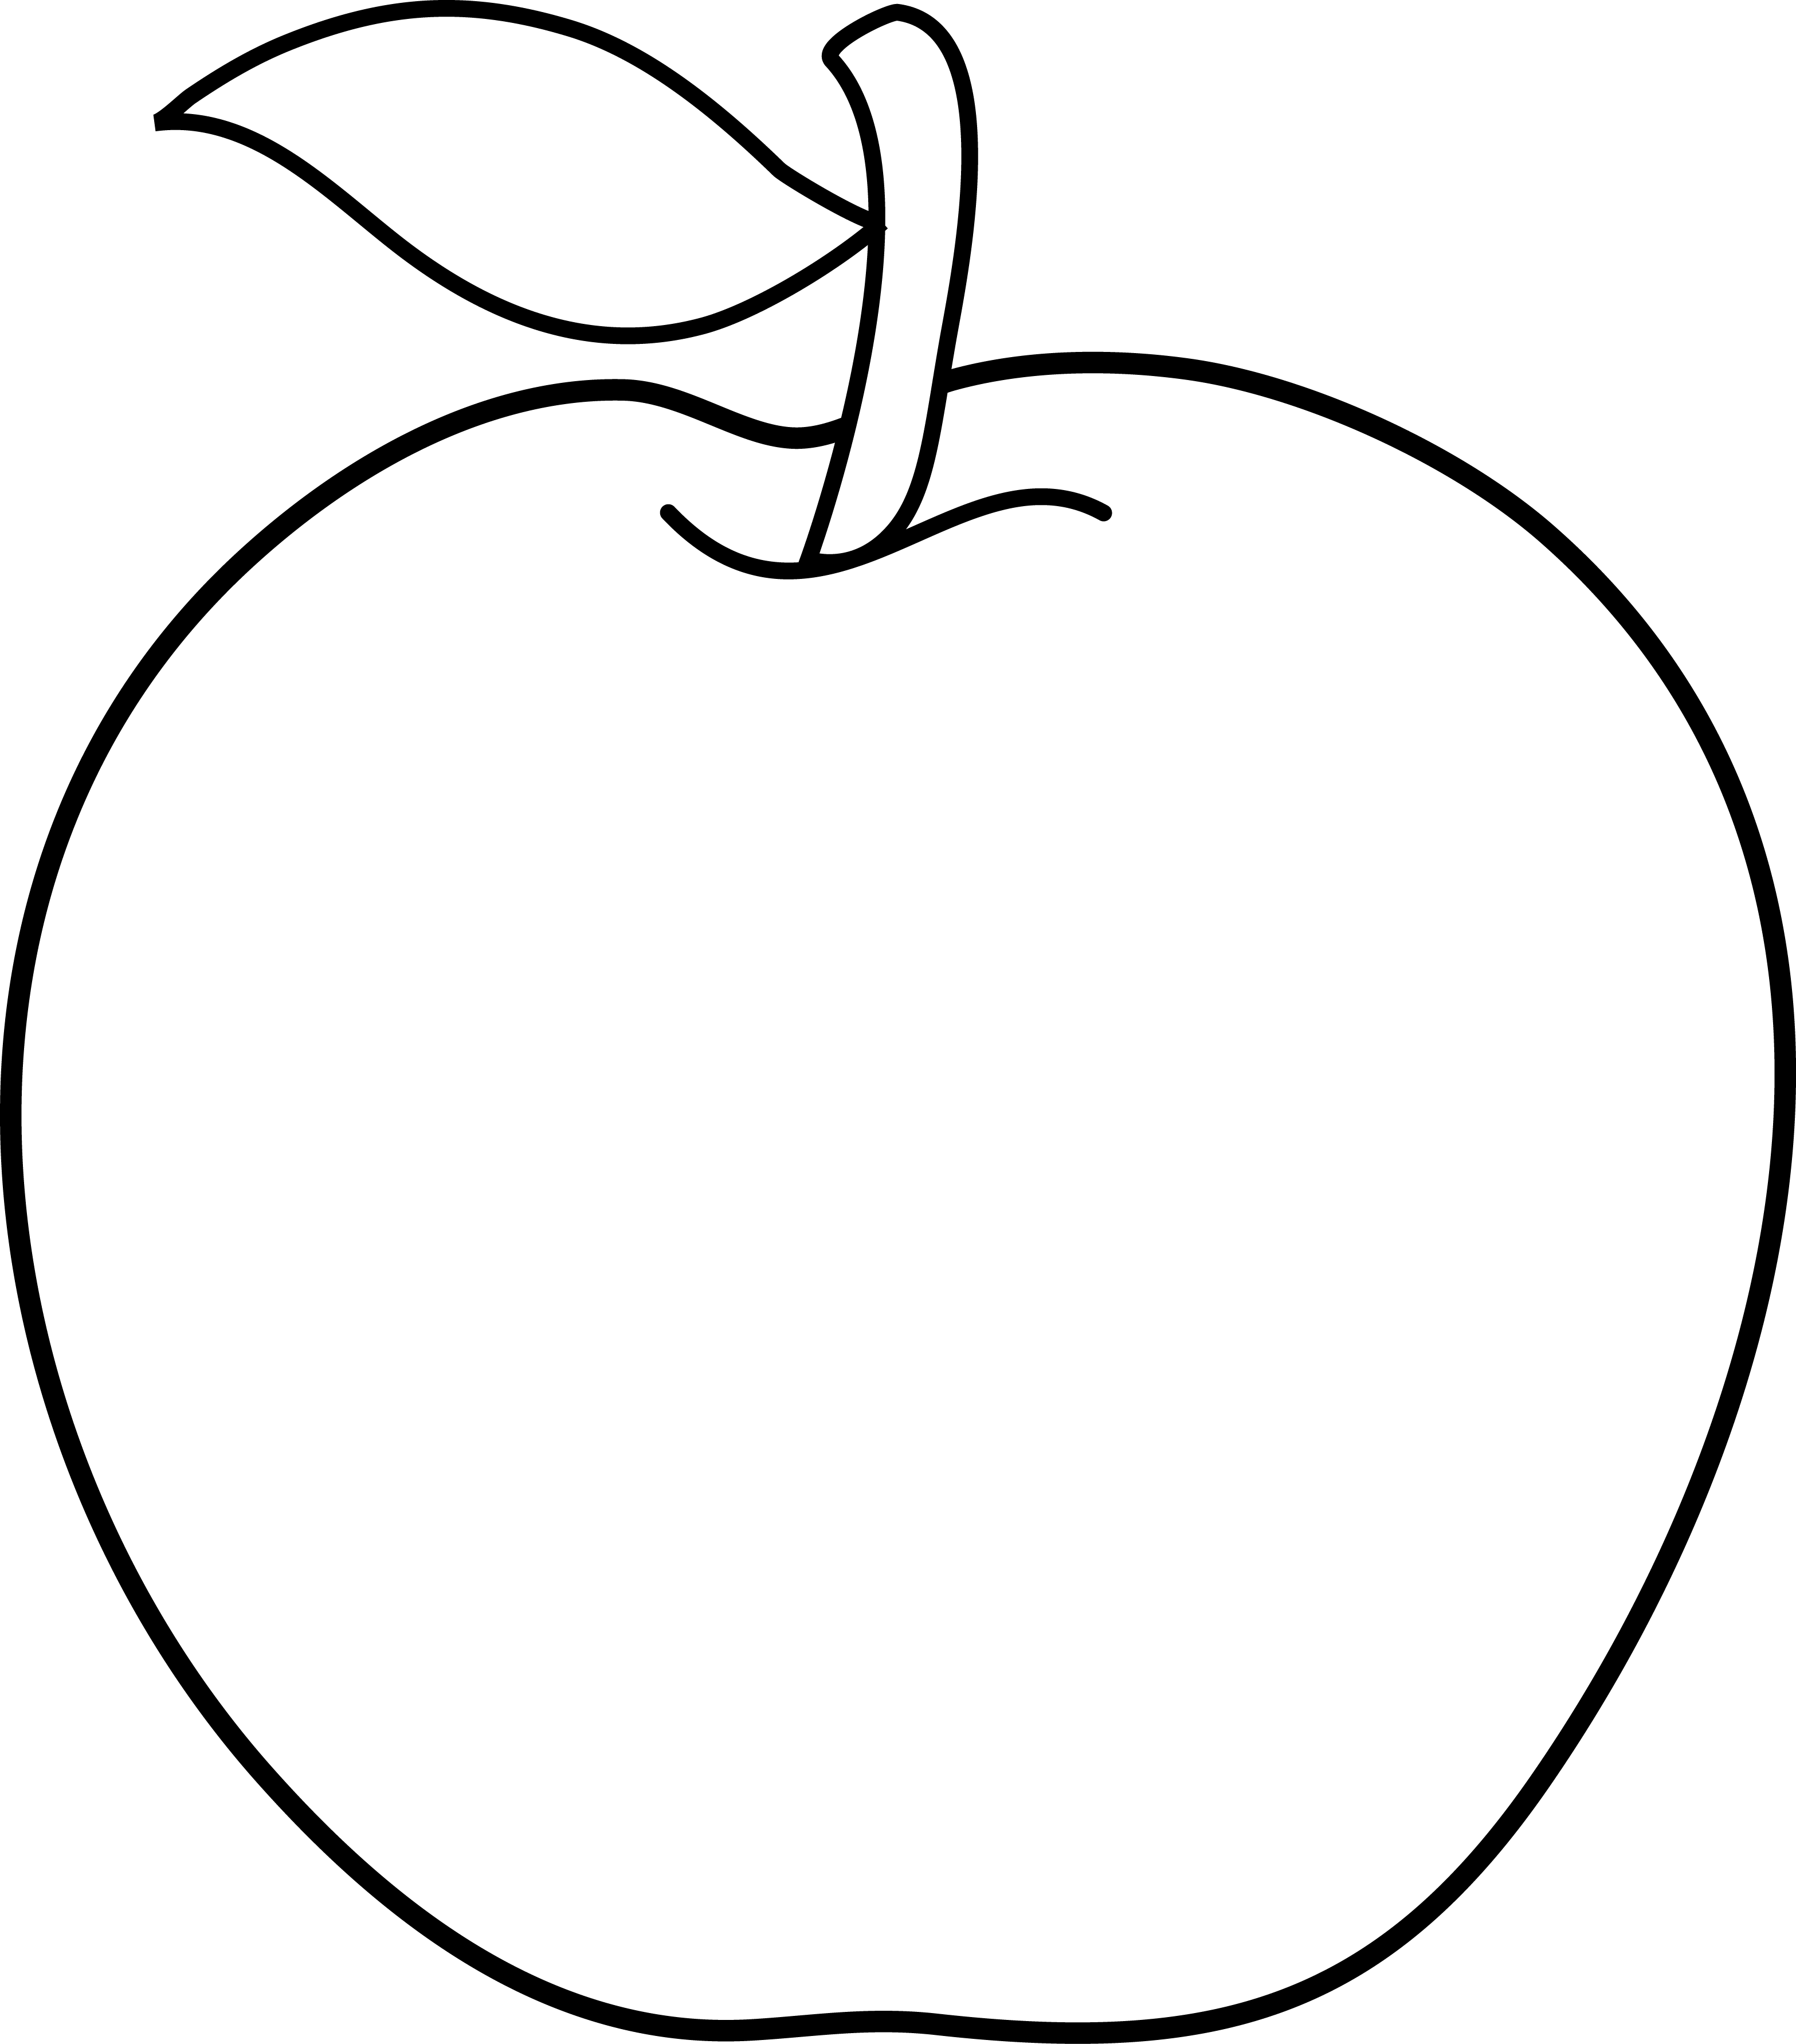 Black And White Apple Clip Art - Cliparts.co